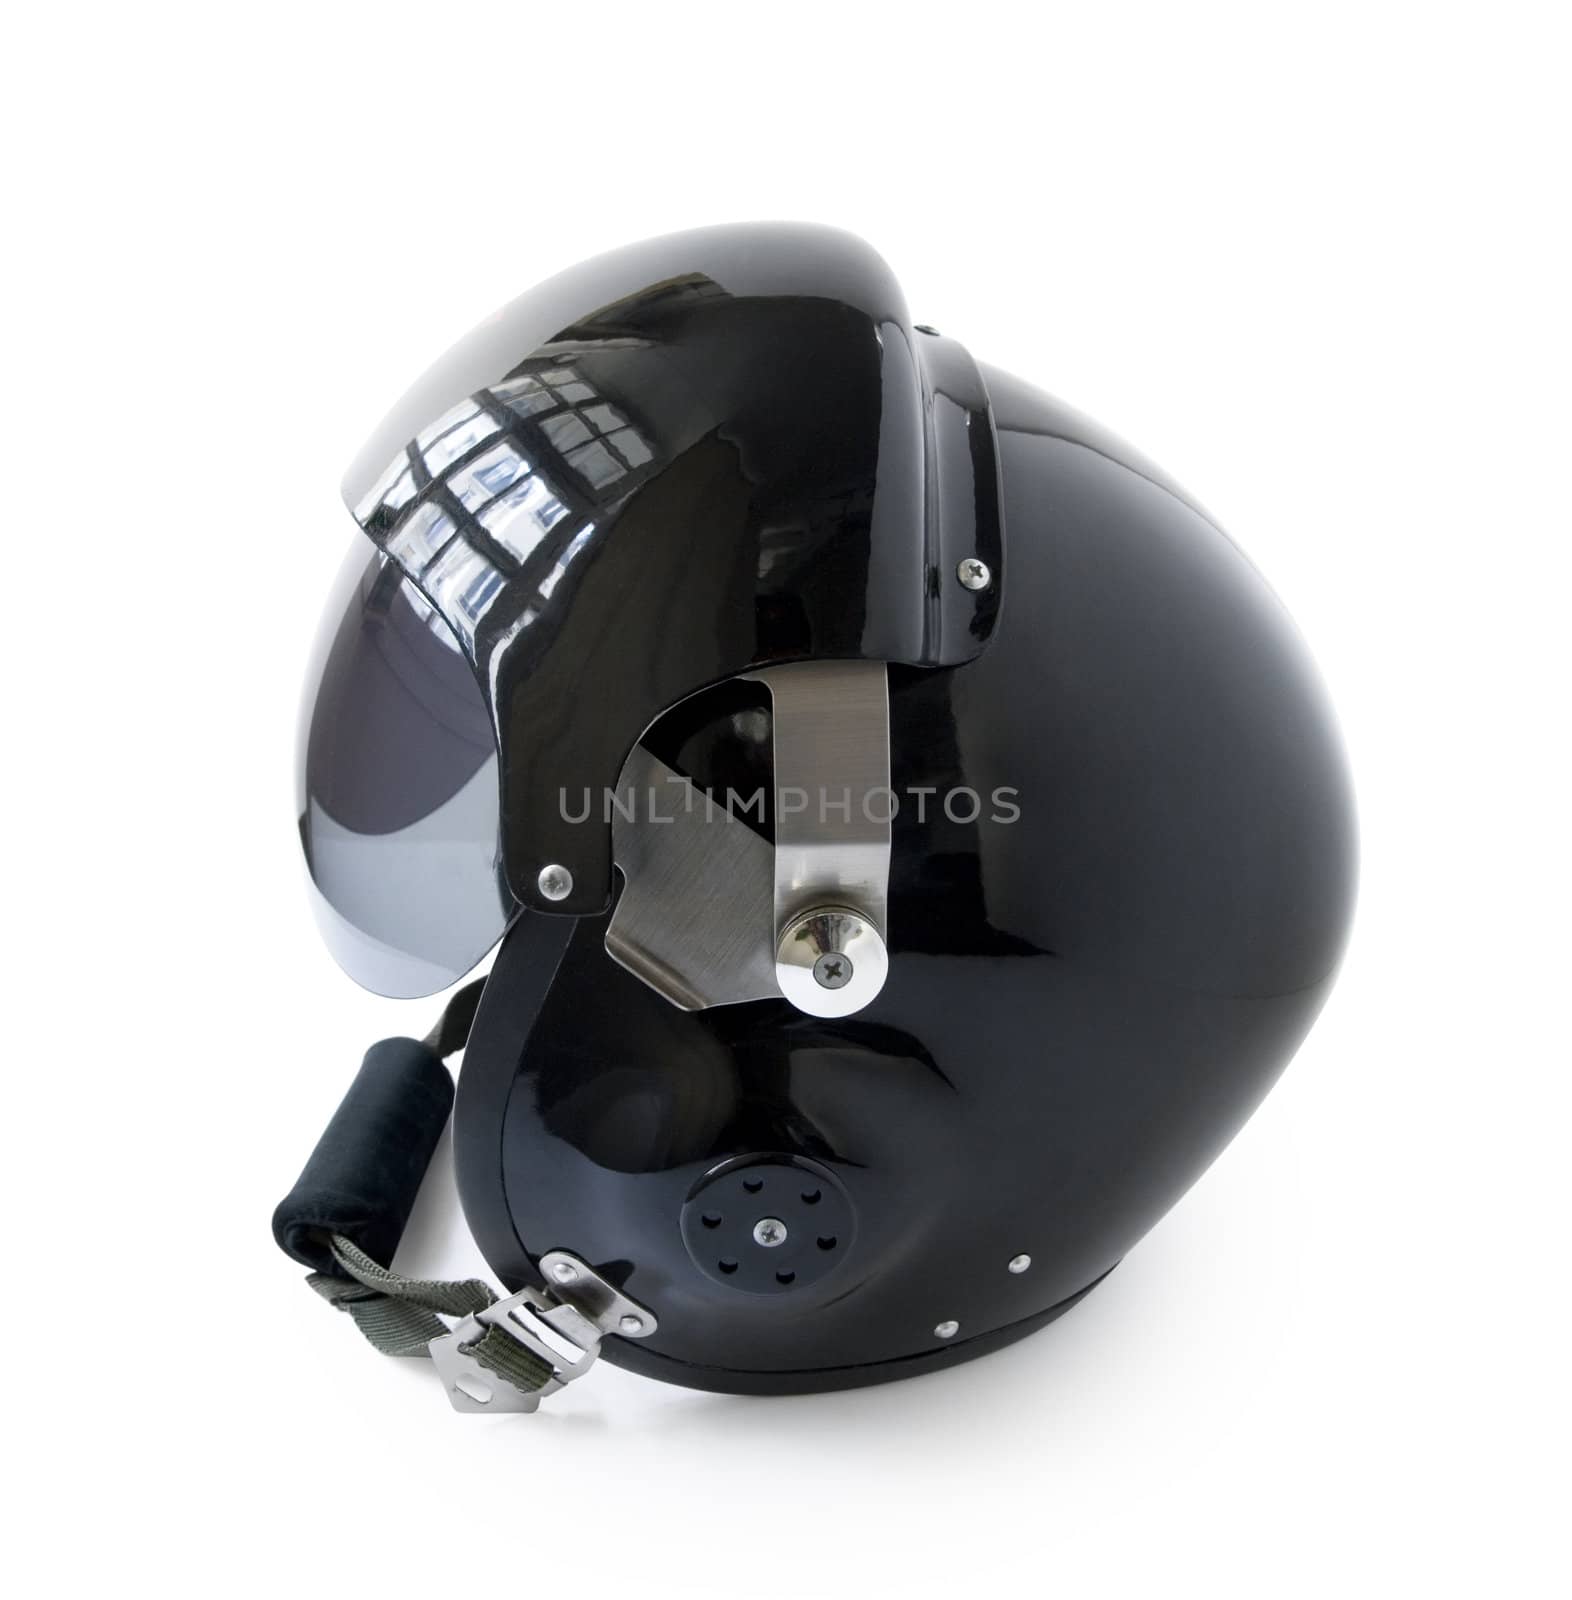 Aviator Helmet by daboost